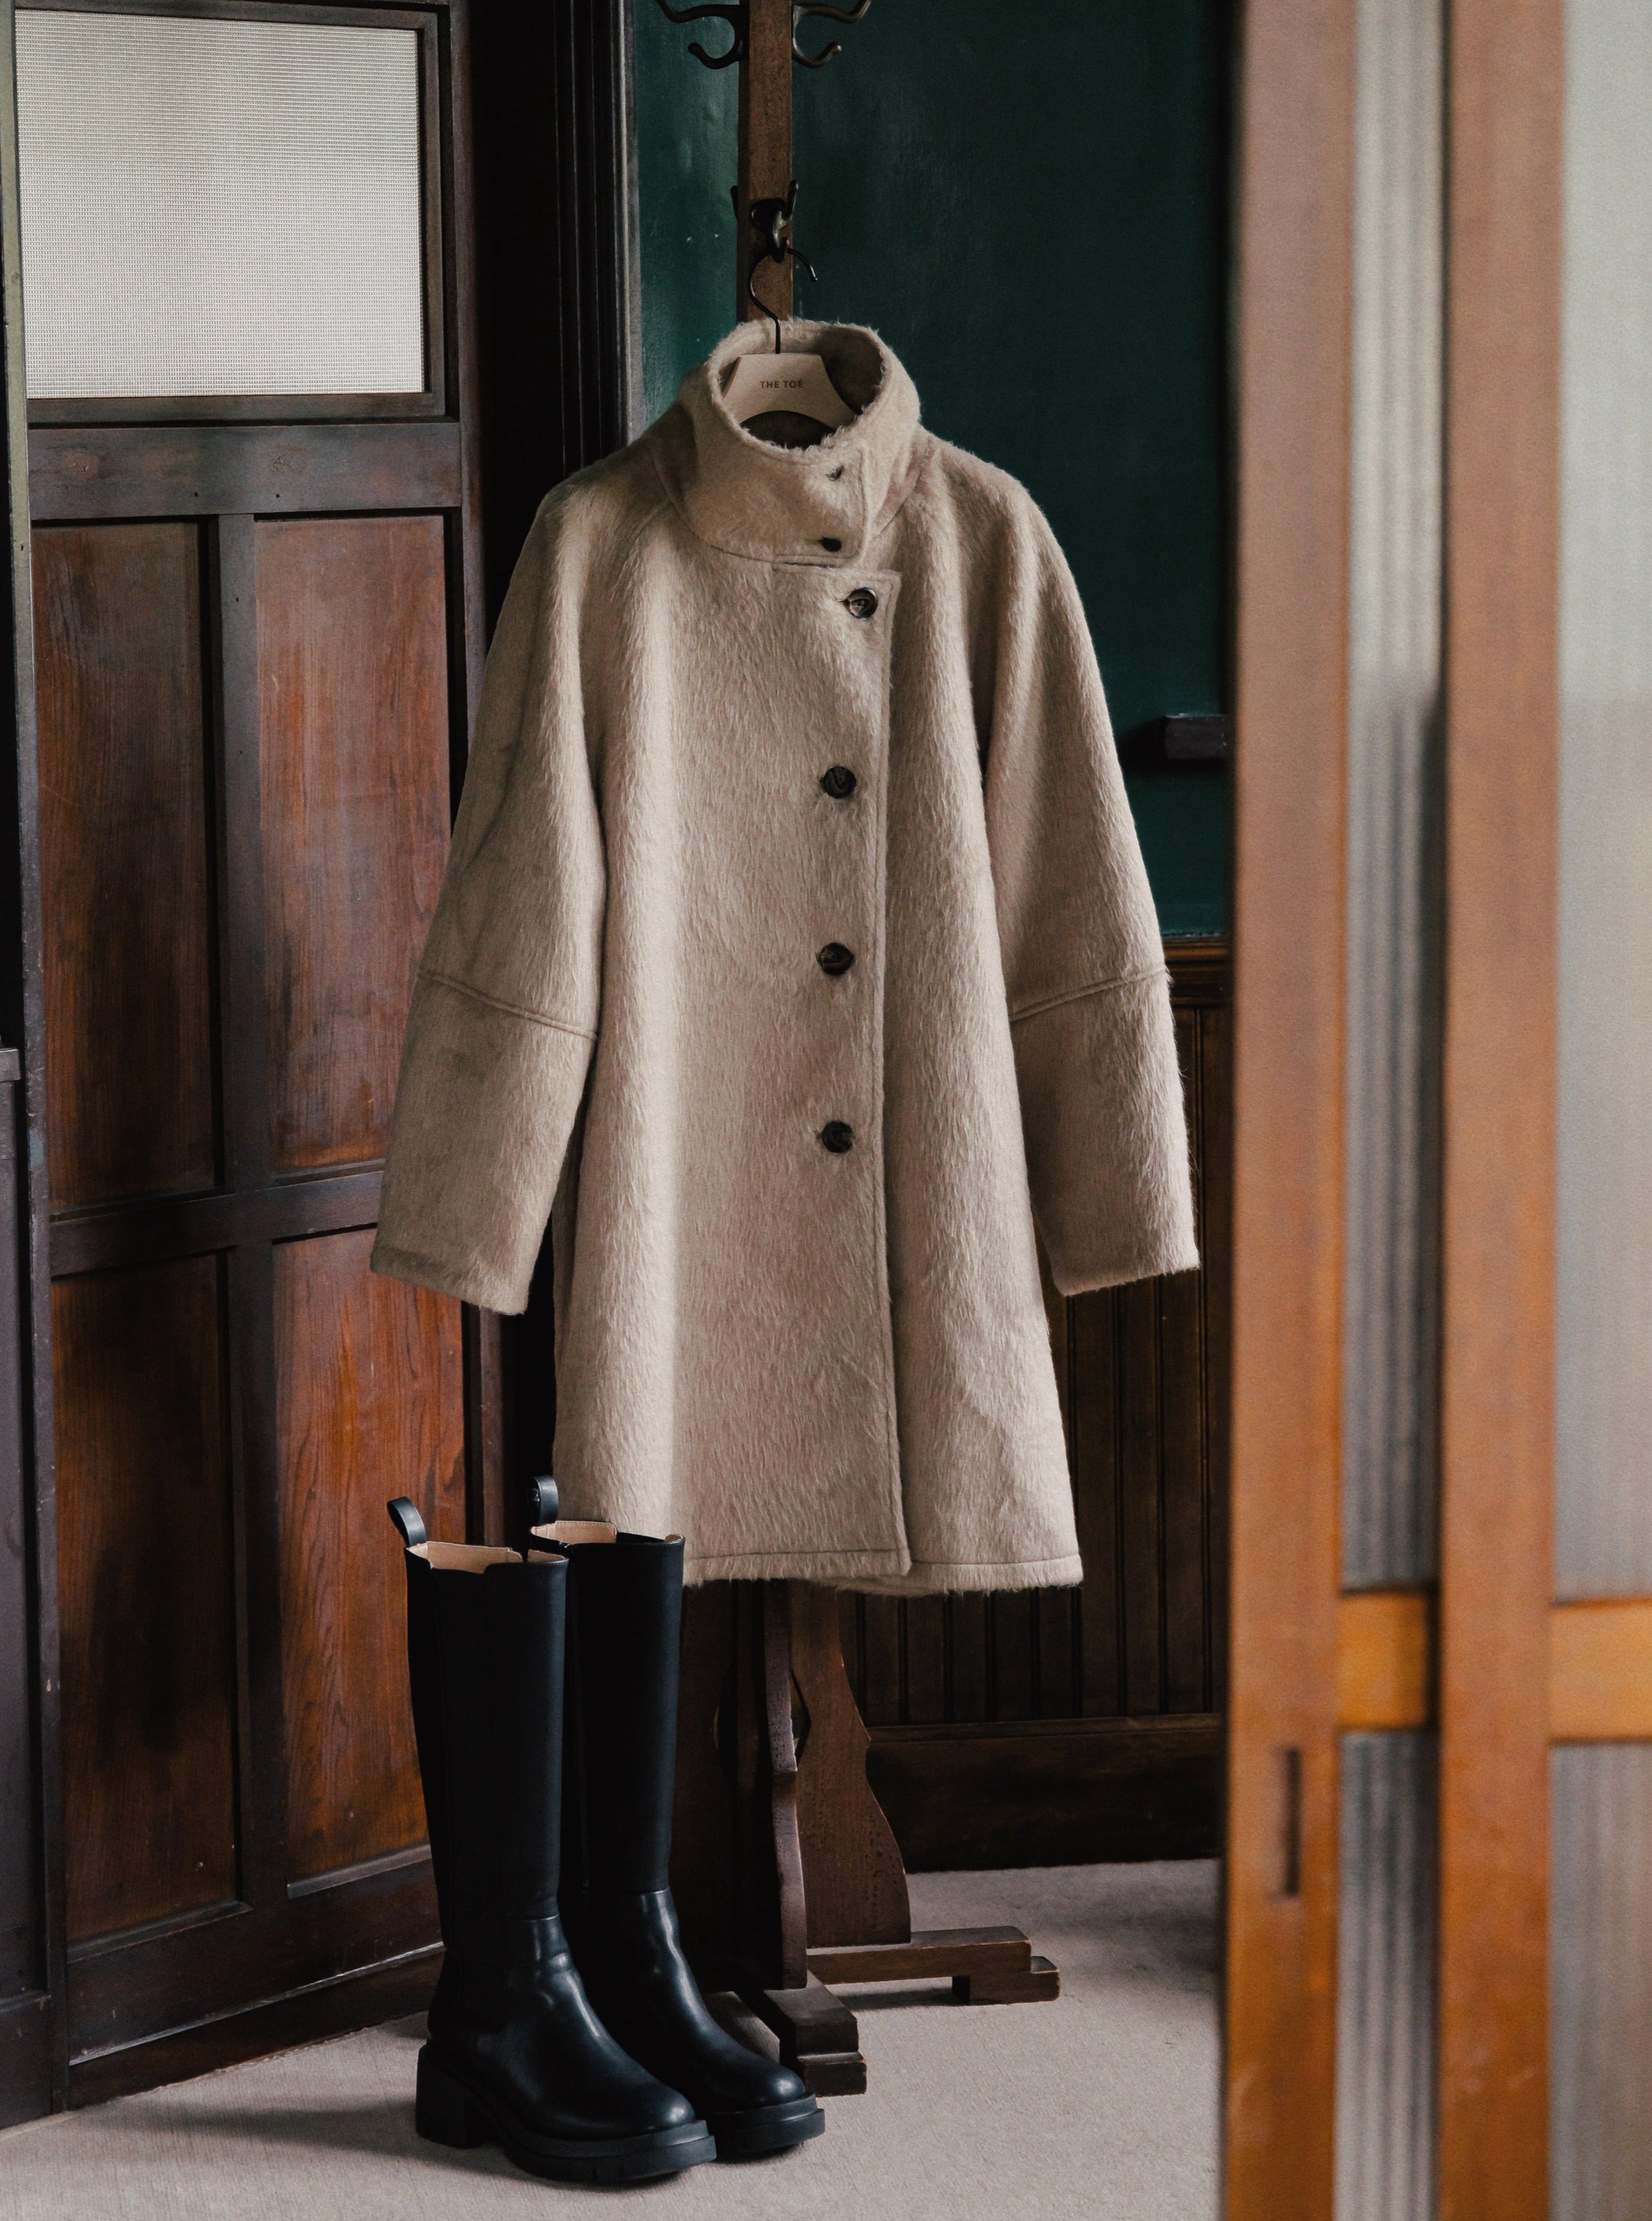 Chambéry standneck coat